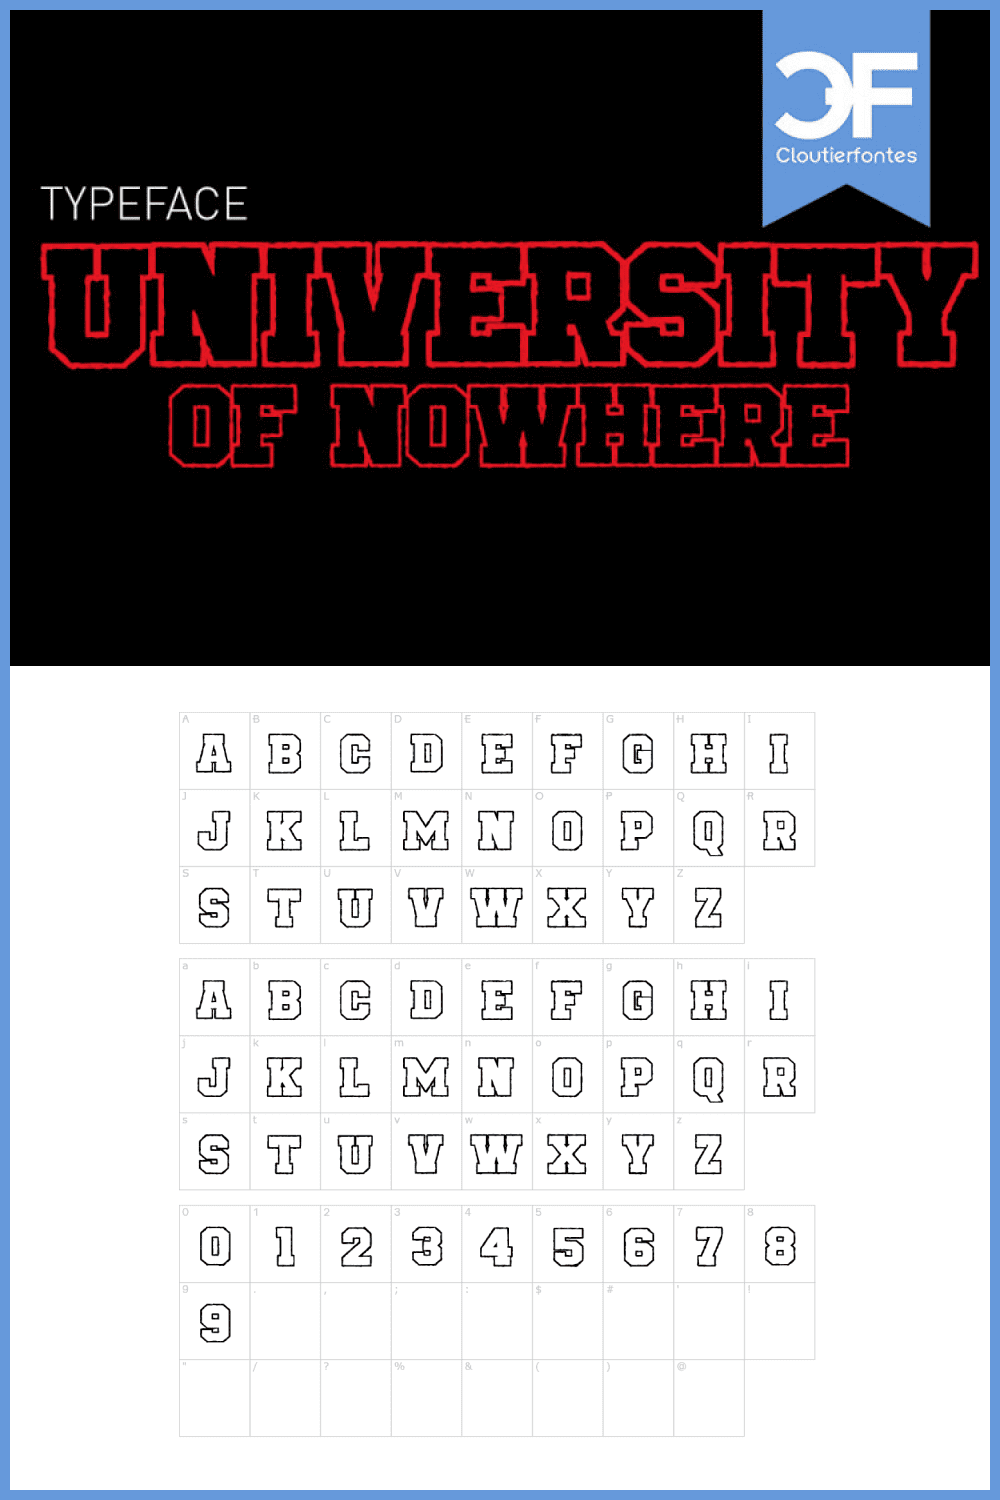 Red font for university sport team.